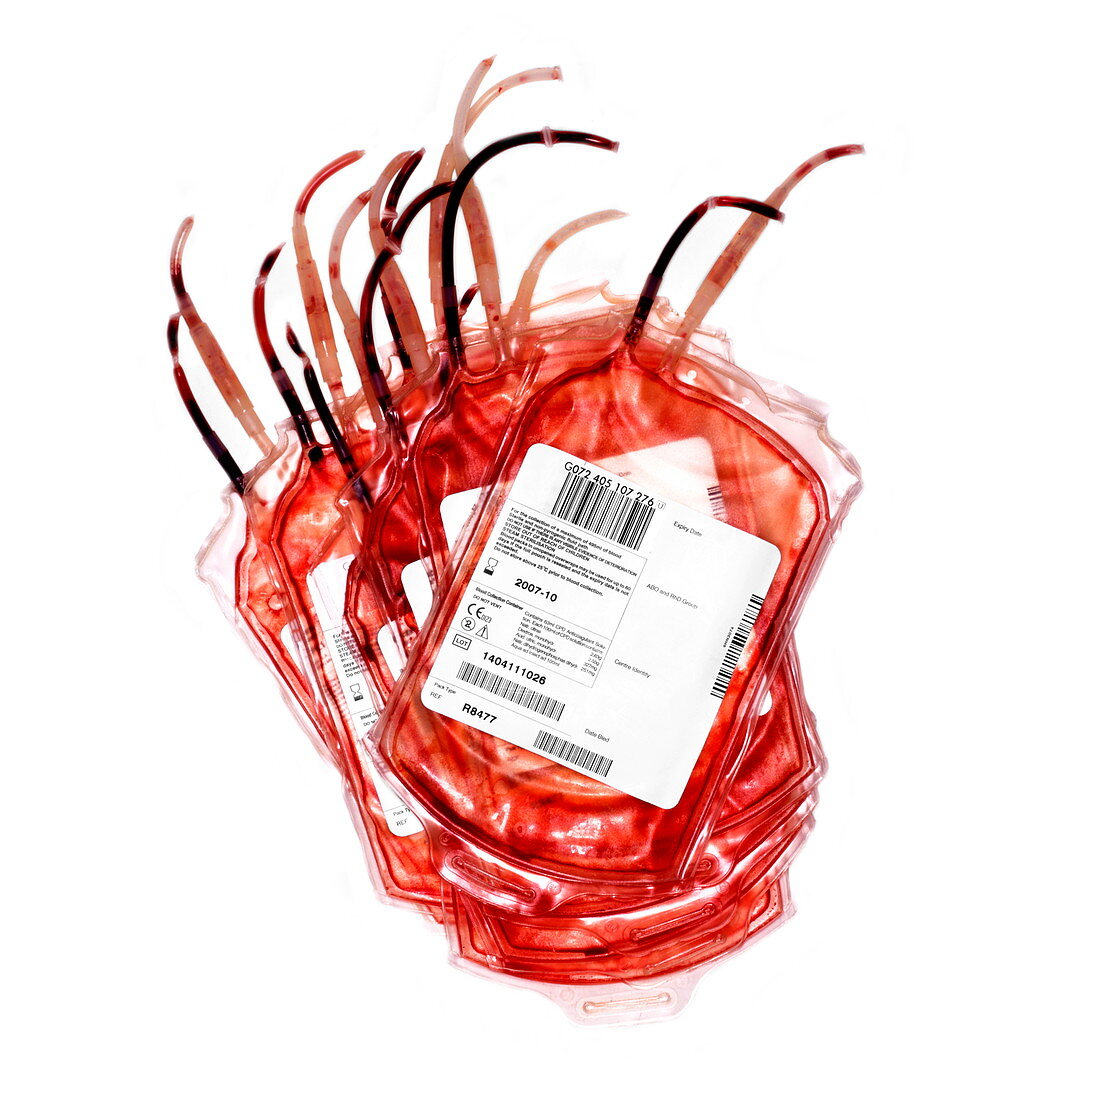 Empty blood bags